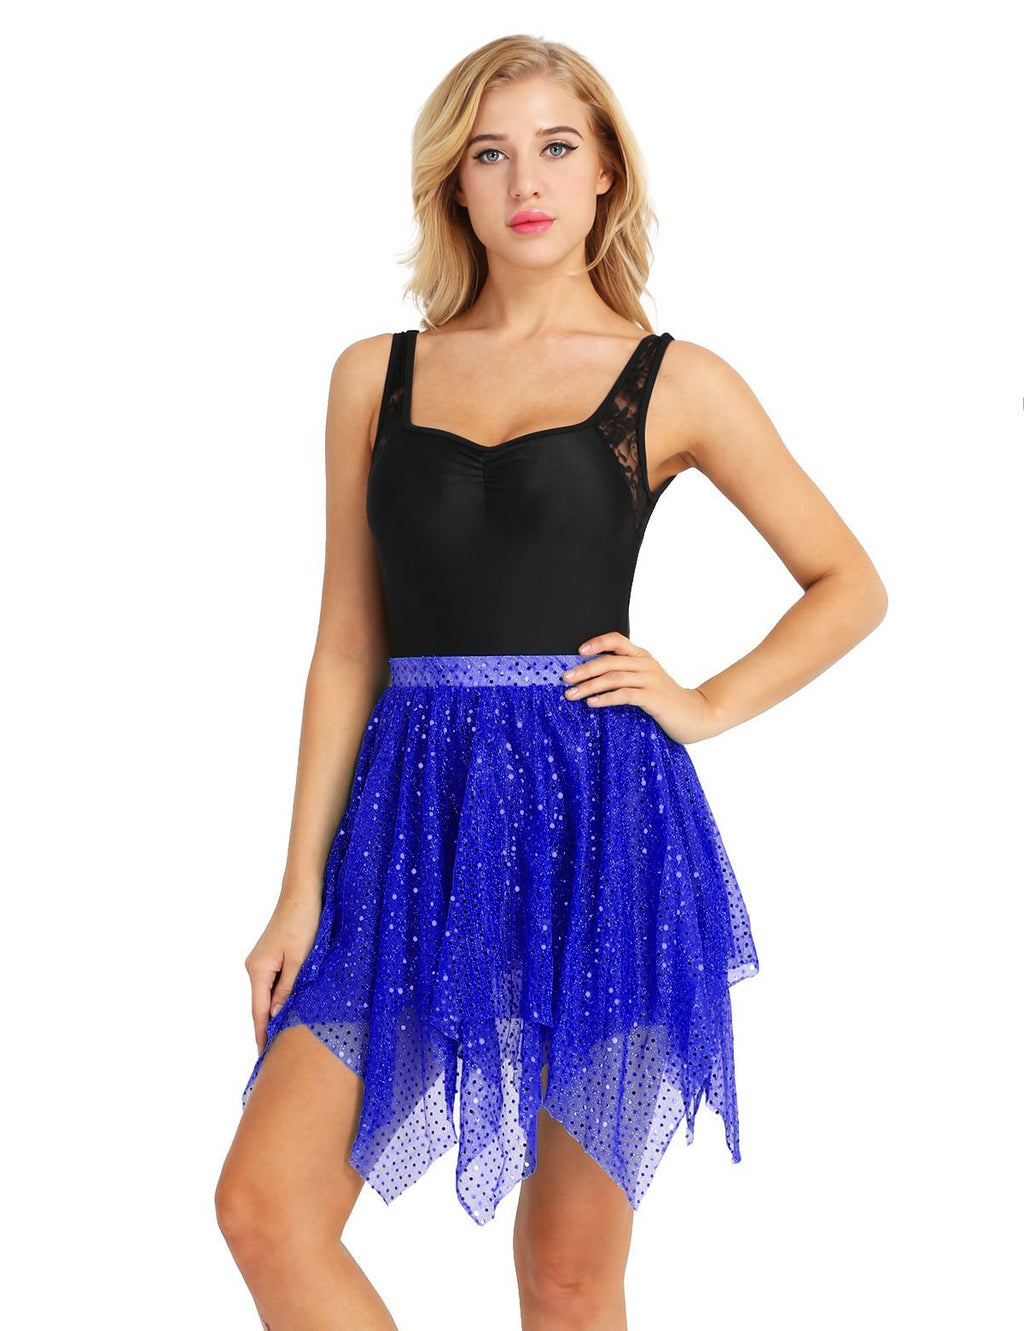 [AUSTRALIA] - iiniim Adult Ladies Ballet Wrap Over Scarf Dance Leotard Skate Tutu Skirt Chiffon One Size Blue Glitter Polka Dots 